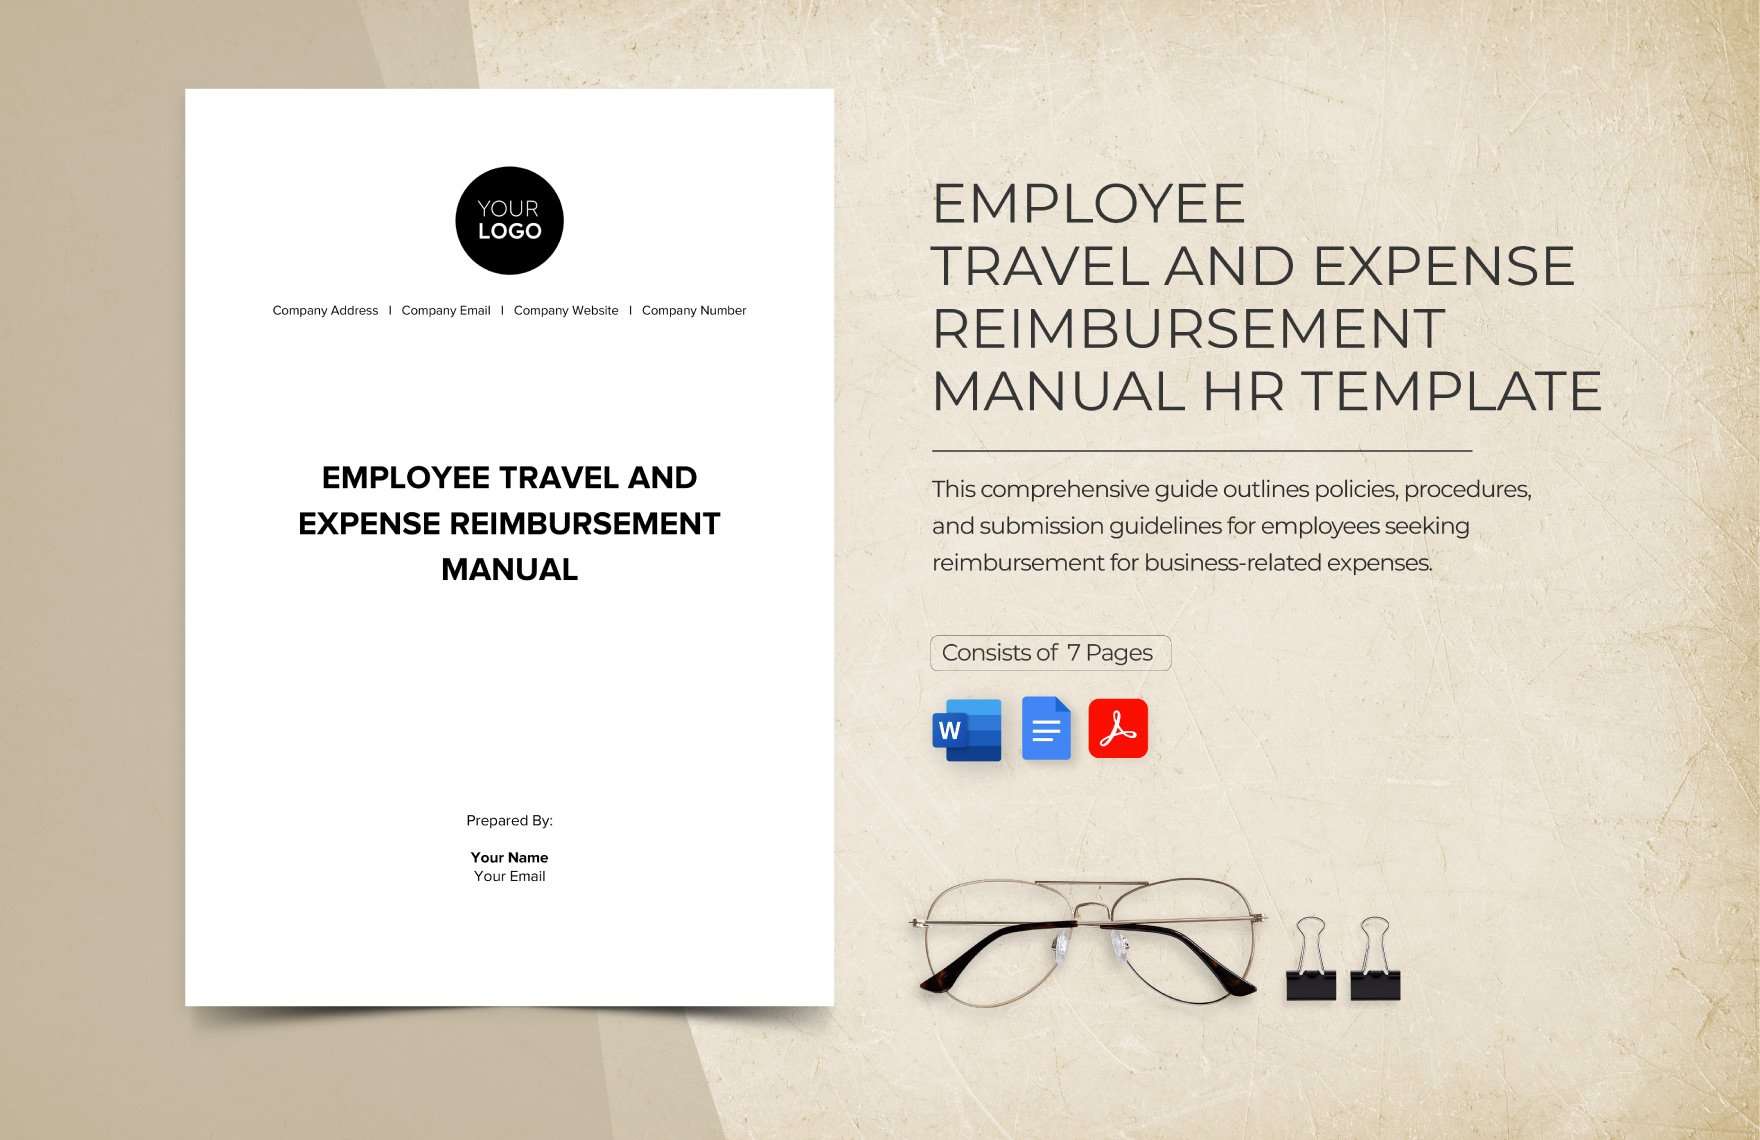 Employee Travel and Expense Reimbursement Manual HR Template in Word, Google Docs, PDF